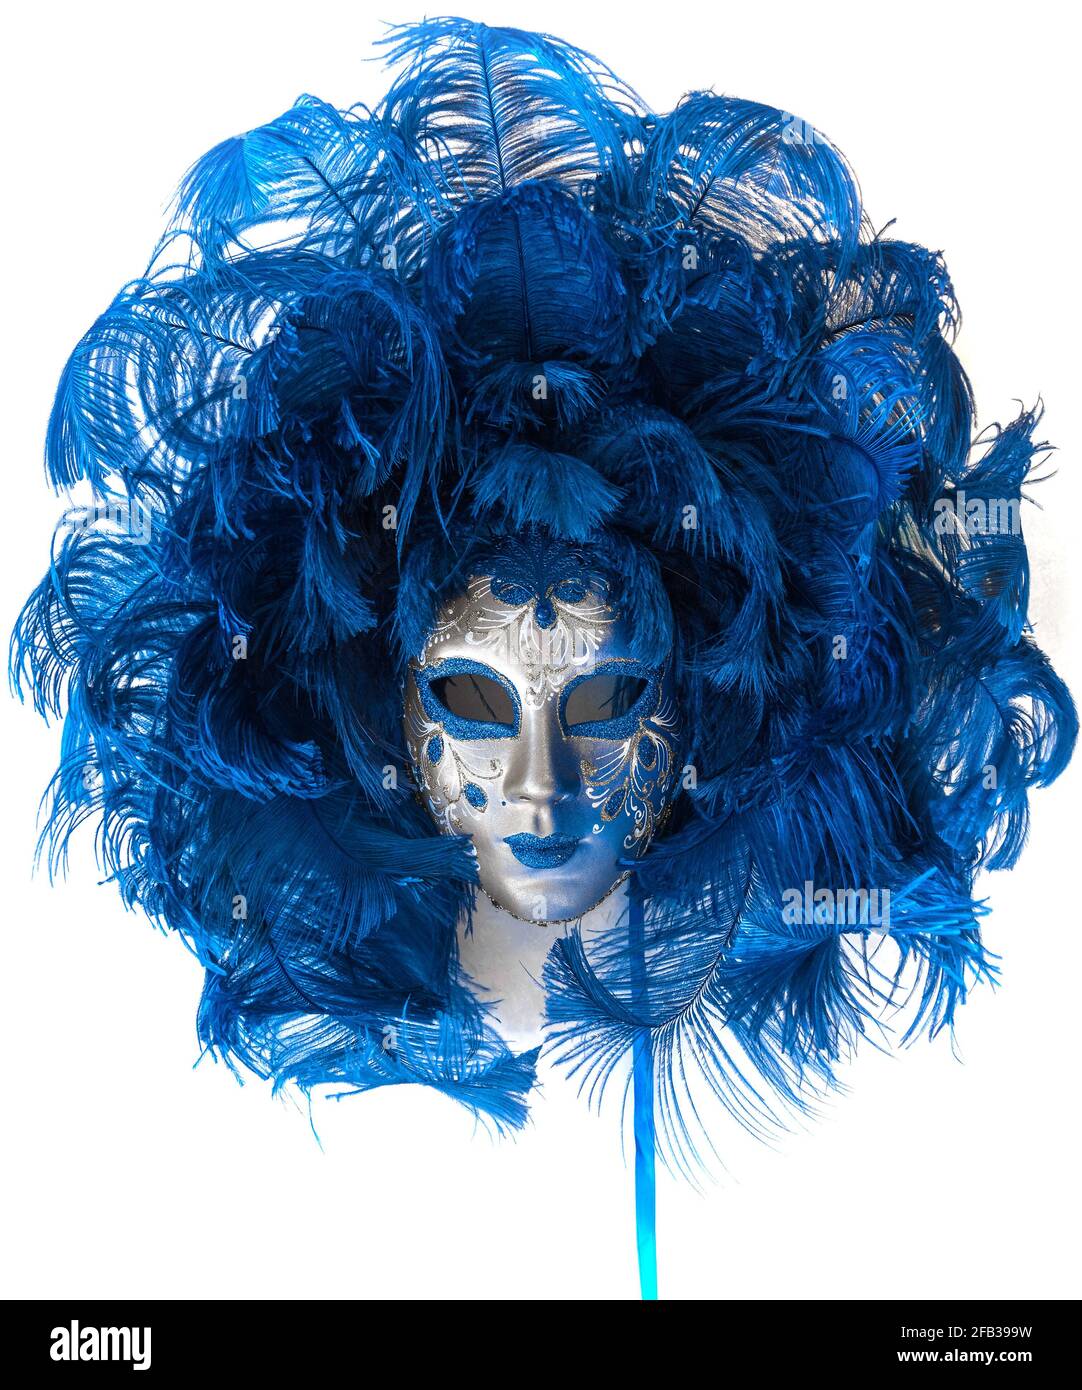 VENICE, ITALY - SEPTEMBER 27, 2017: Venetian female carnival mask close up on a light background Stock Photo